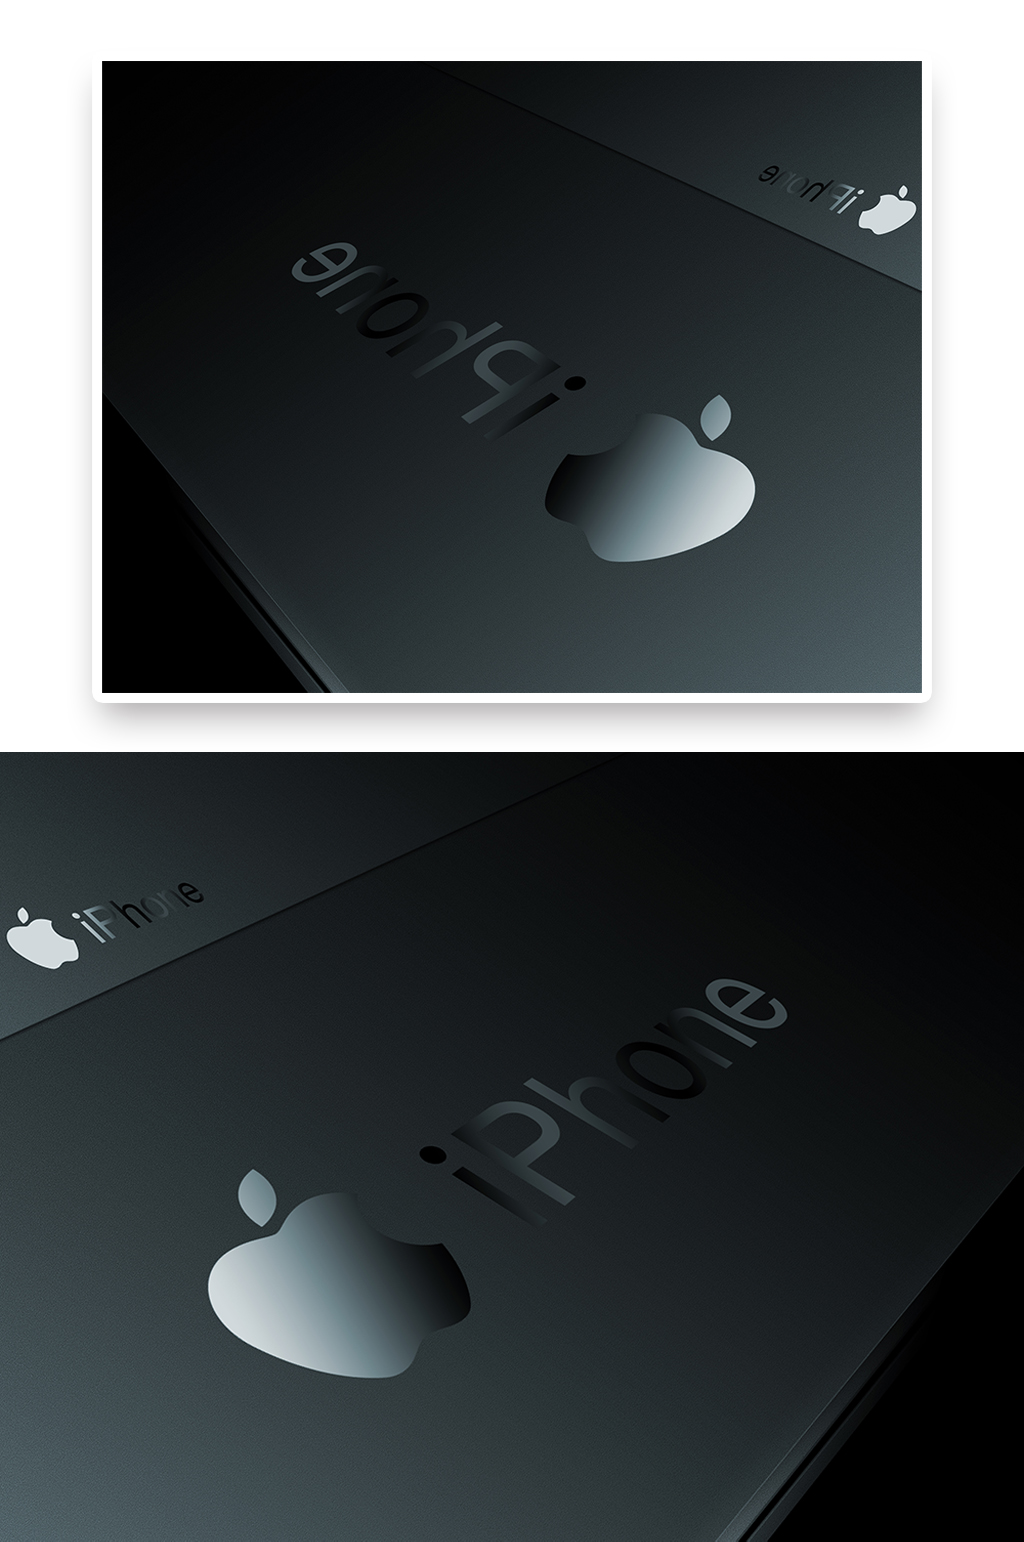 苹果黑色logo符号复制图片